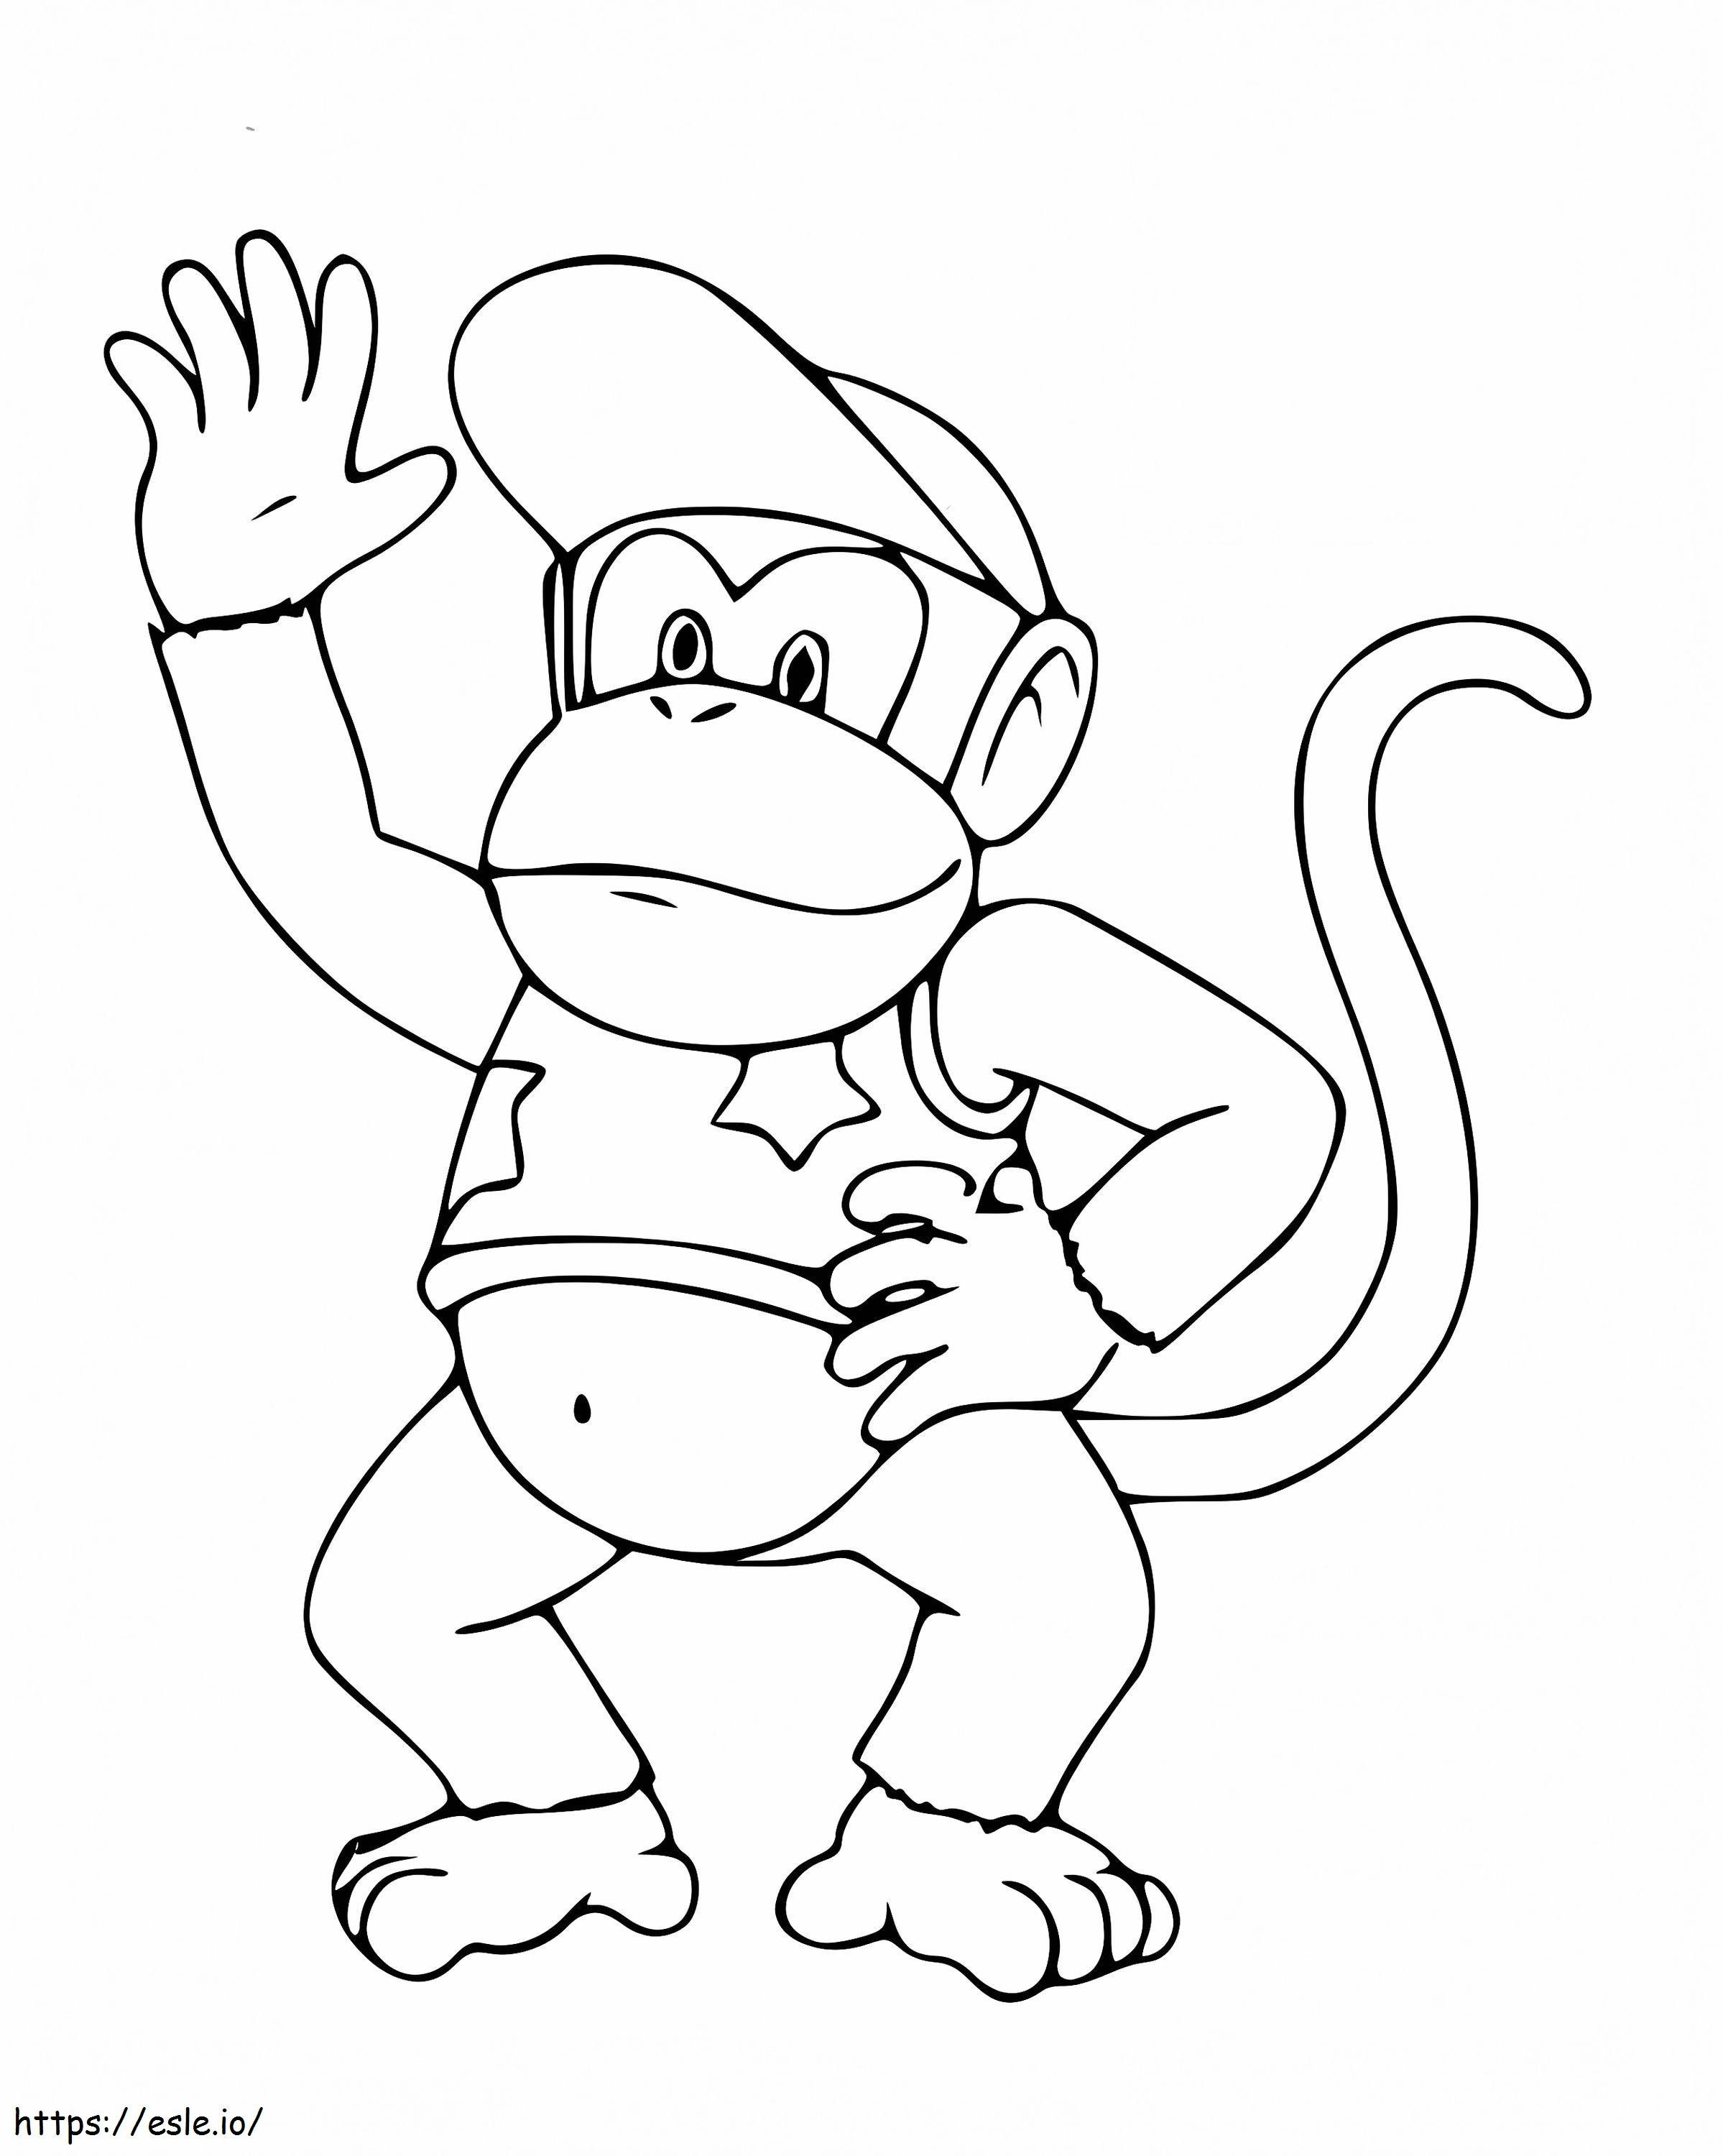 Diddy Kong Waving Hand coloring page